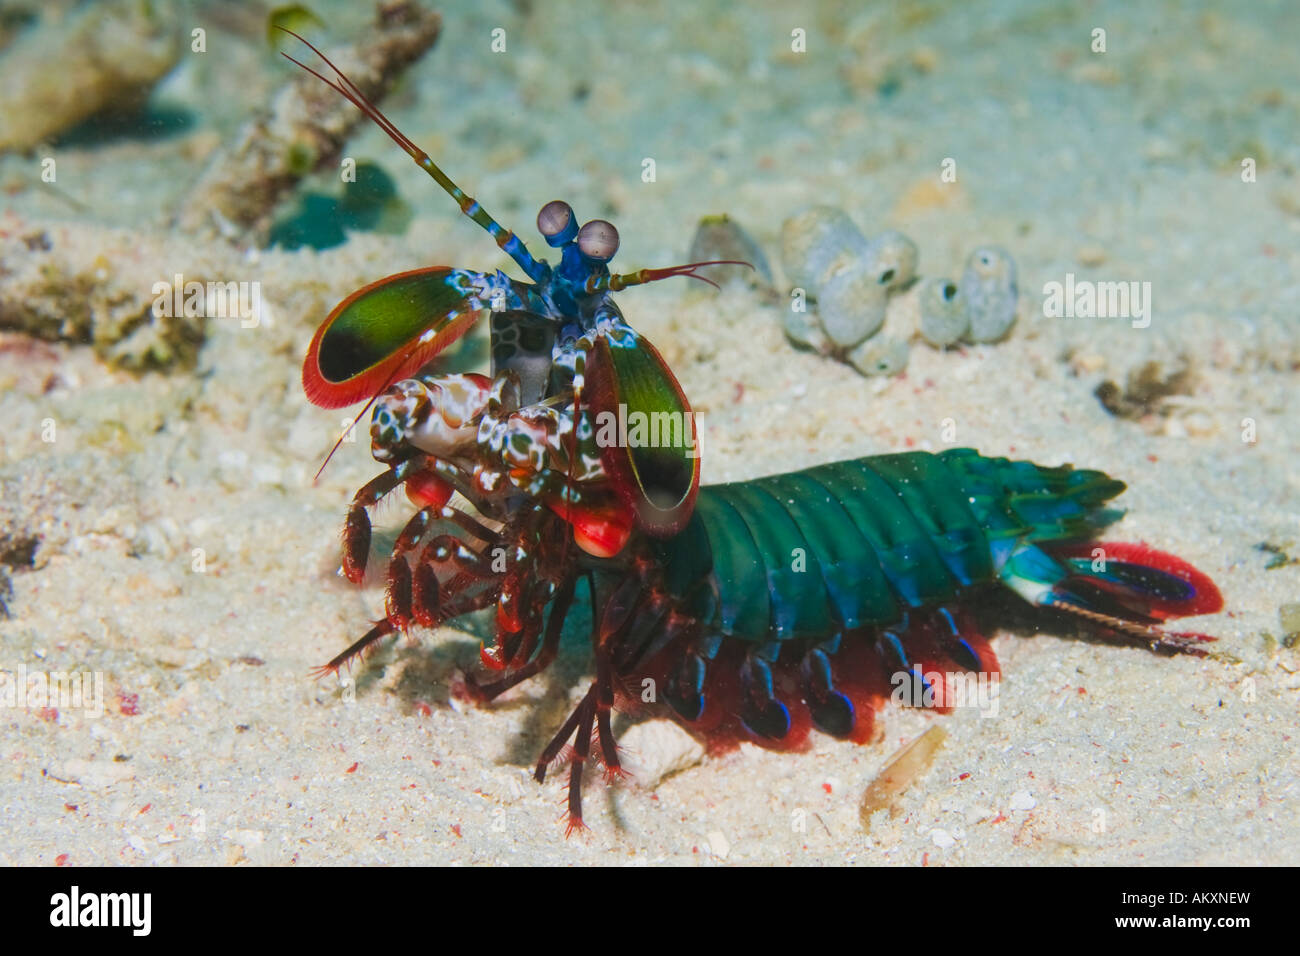 Mantis shrimp, Odontodactylus scyllarus. Stock Photo